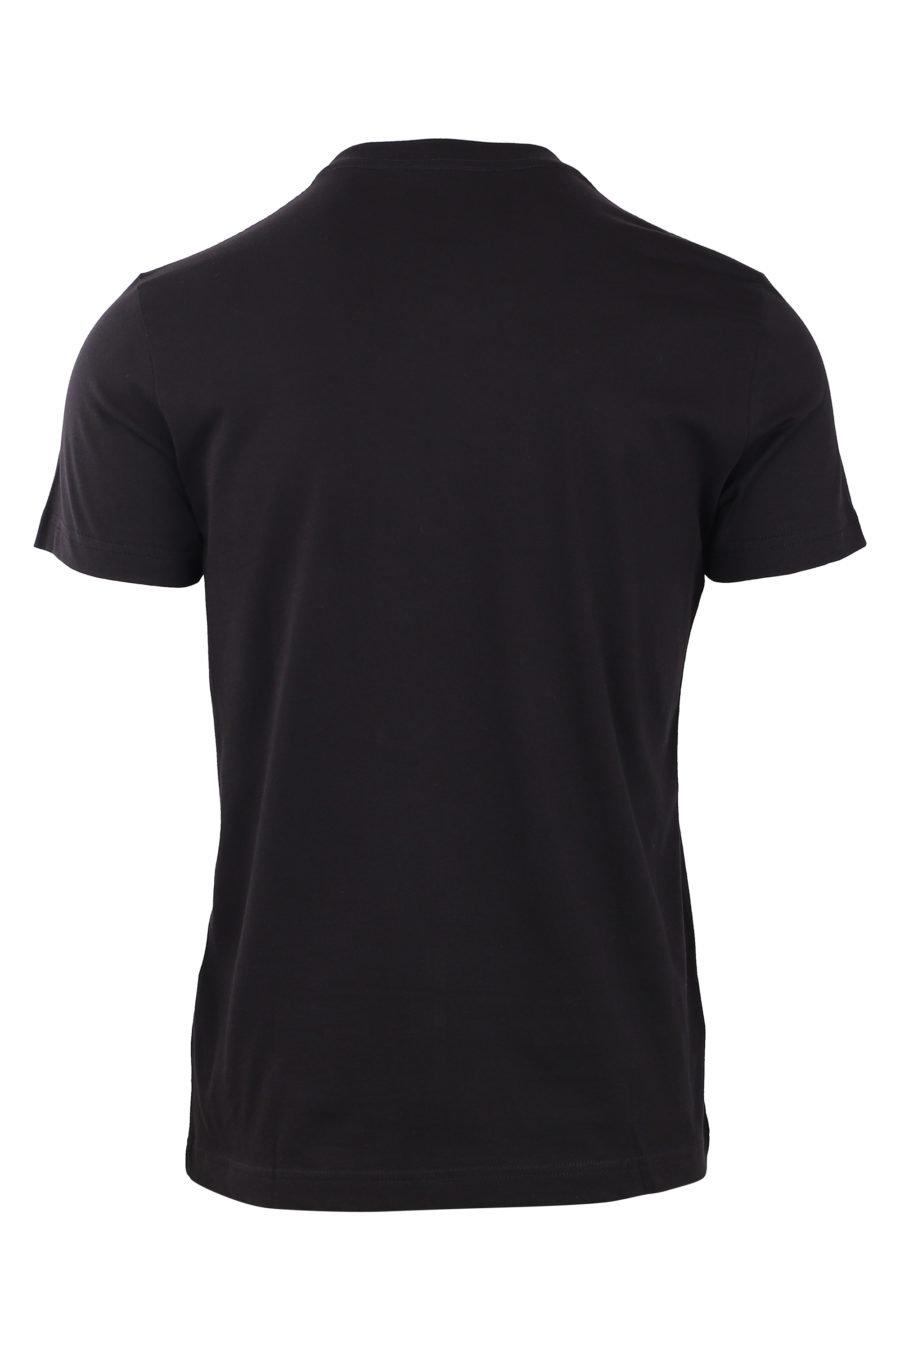 Camiseta negra con logo redondo pequeño - IMG 0780